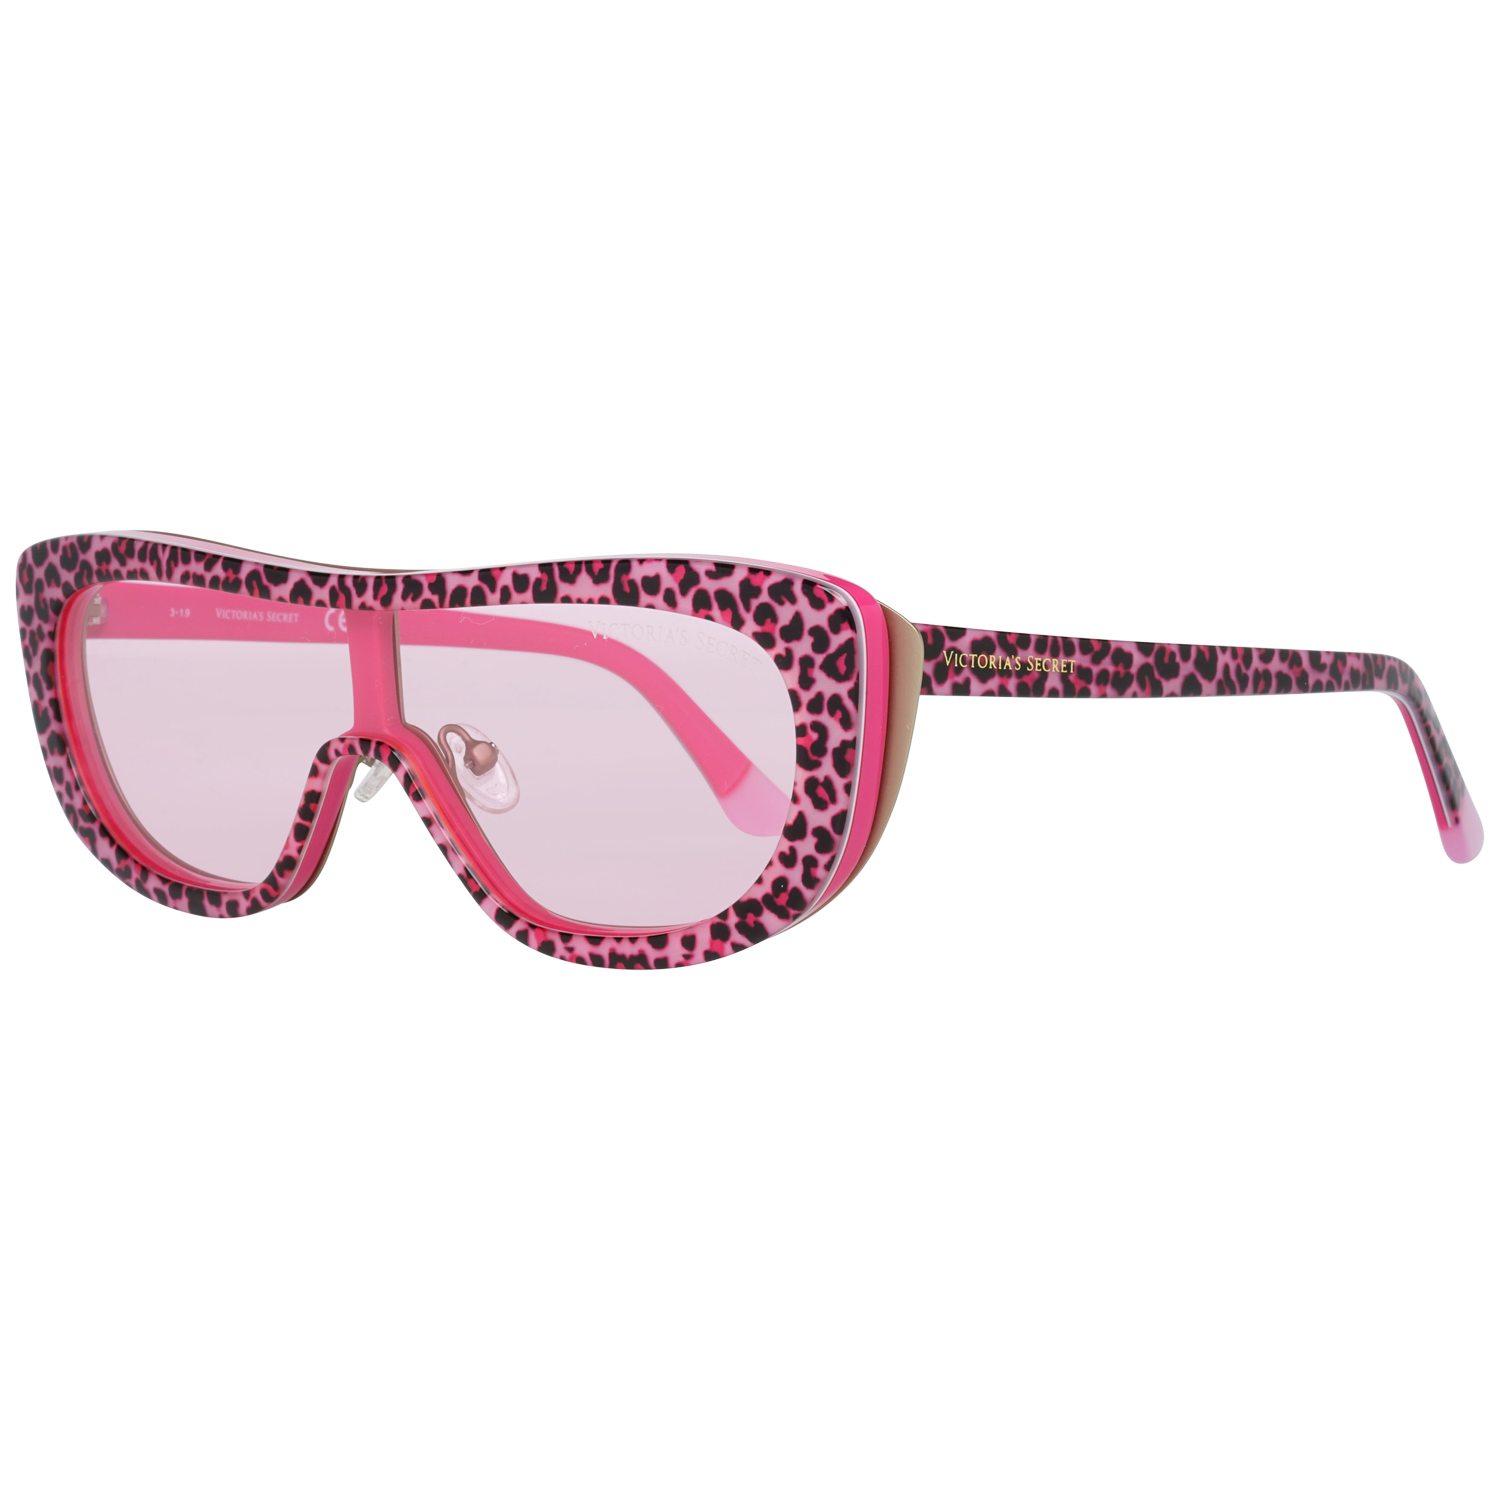 Victoria's Secret Sunglasses VS0011 77T 128 Pink